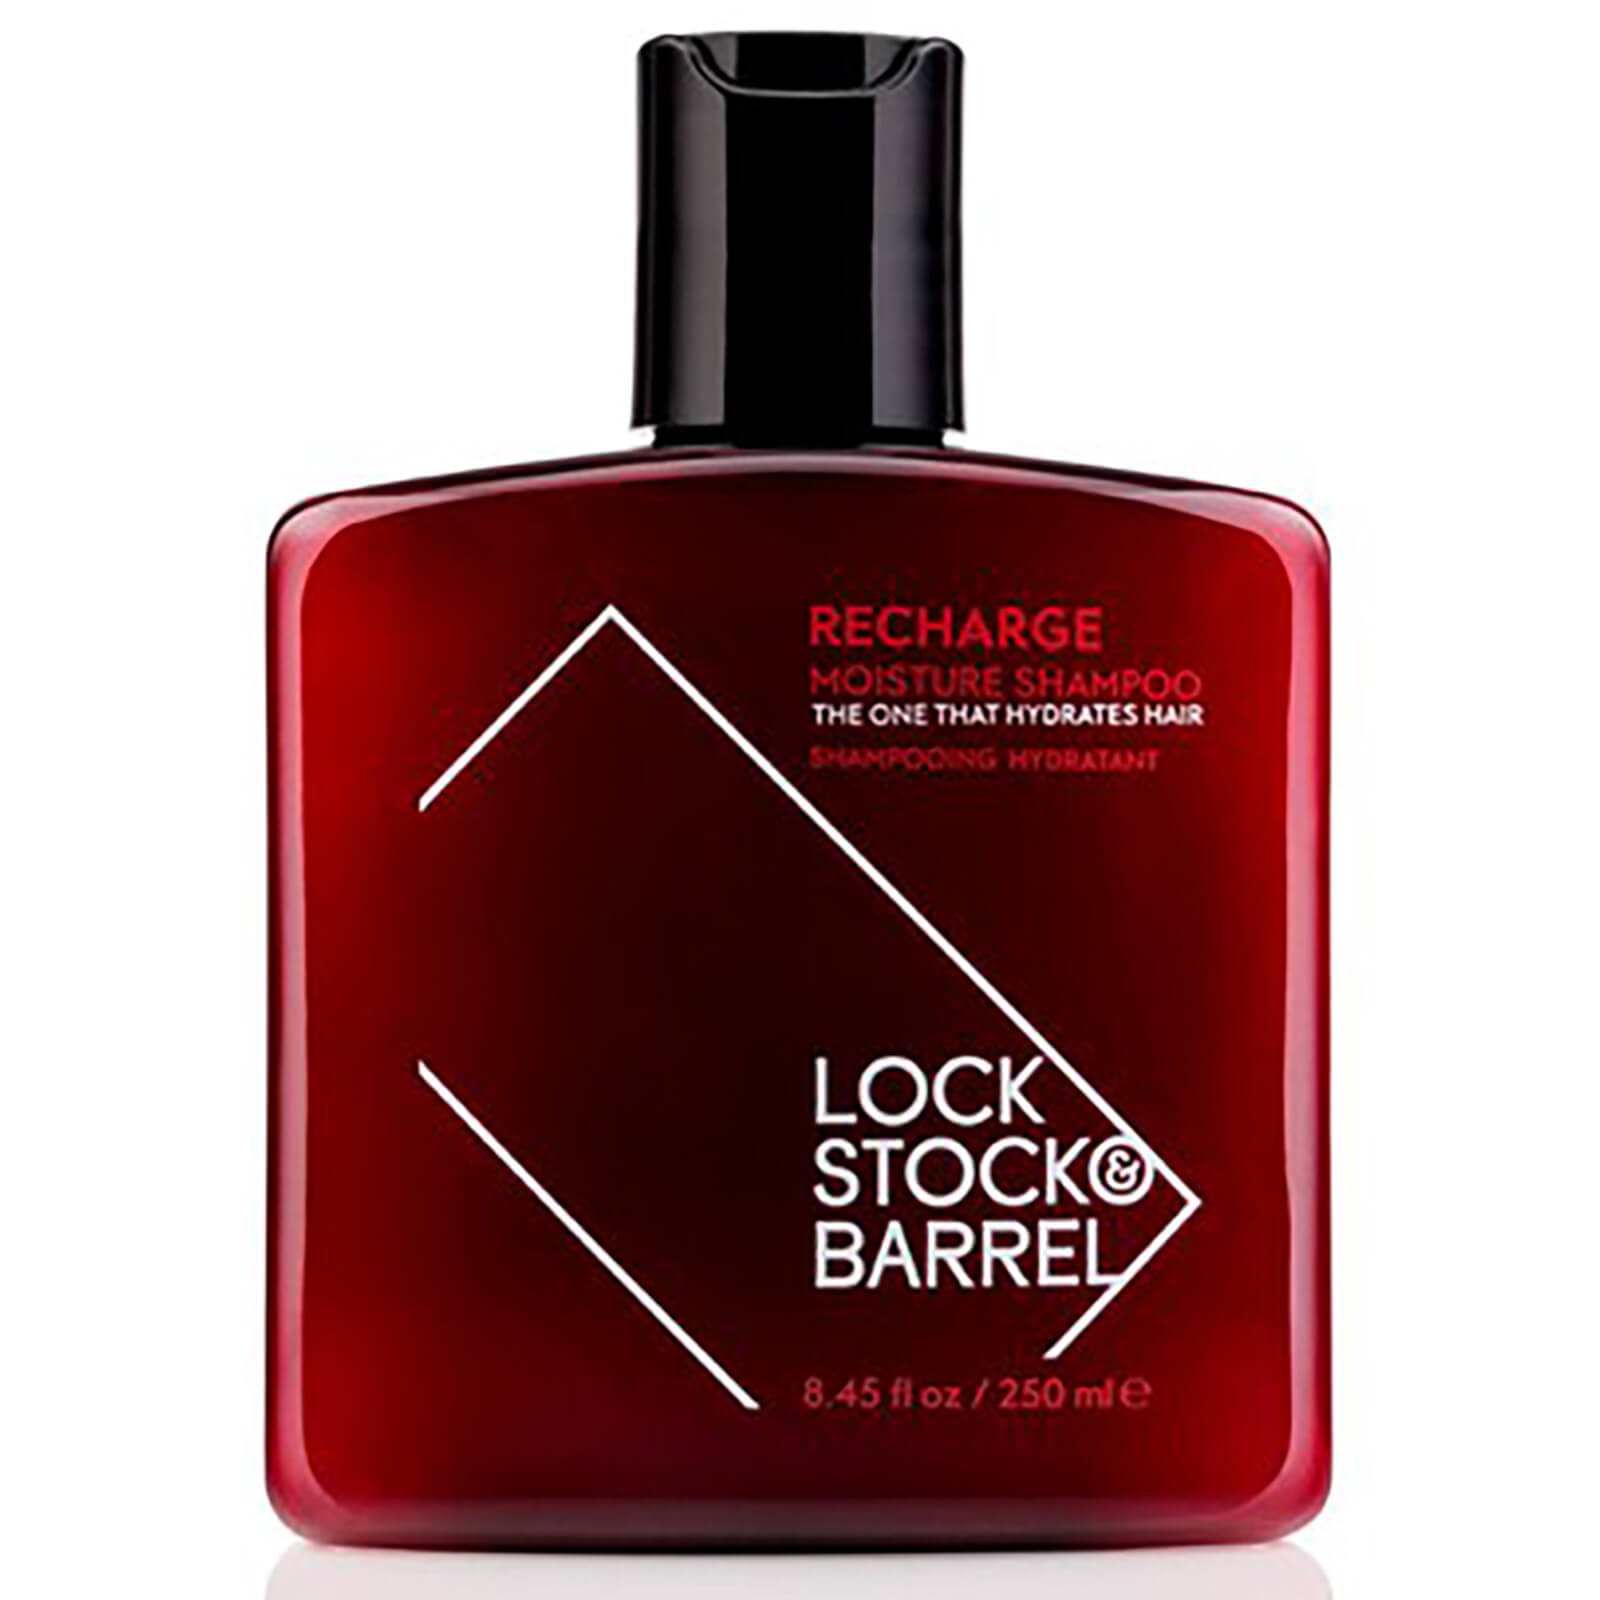 Champú hidratante Recharge de Lock Stock & Barrel (250 ml)